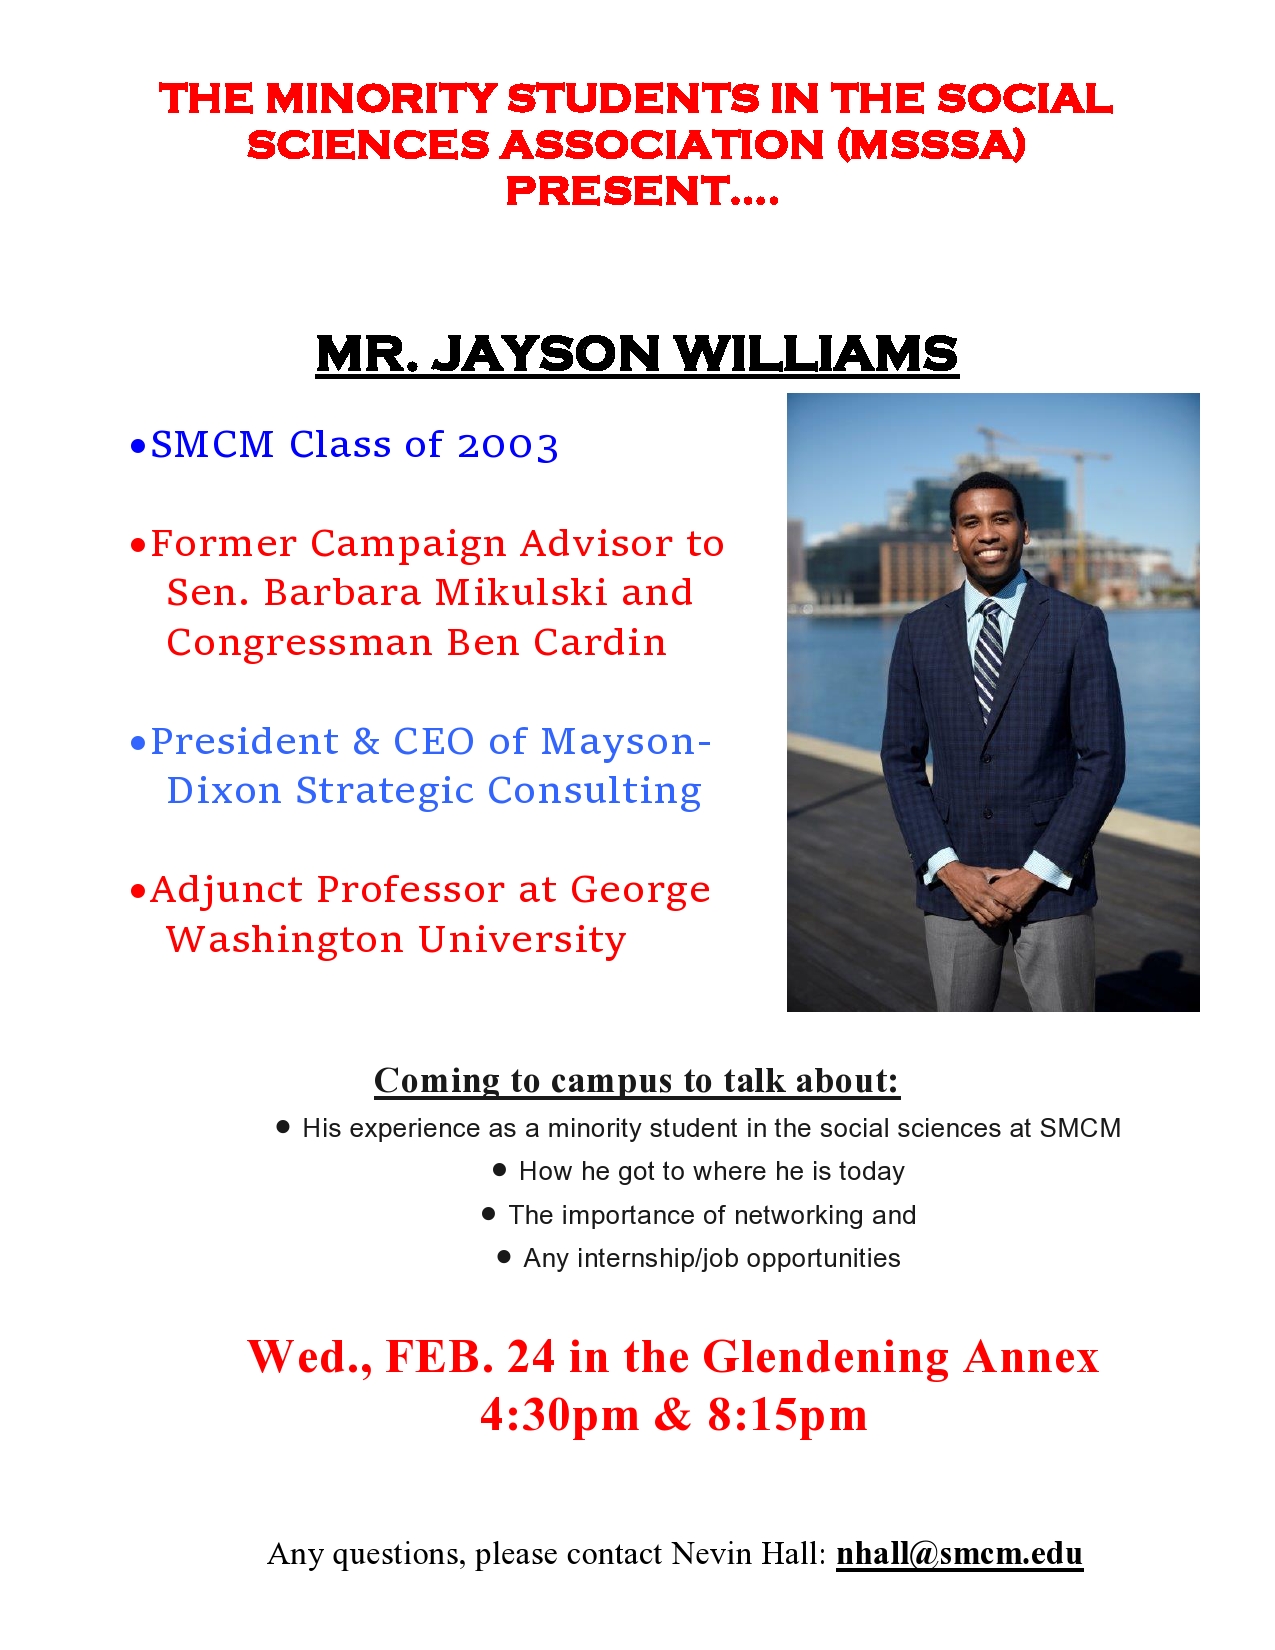 Jayson Williams MSSSA poster